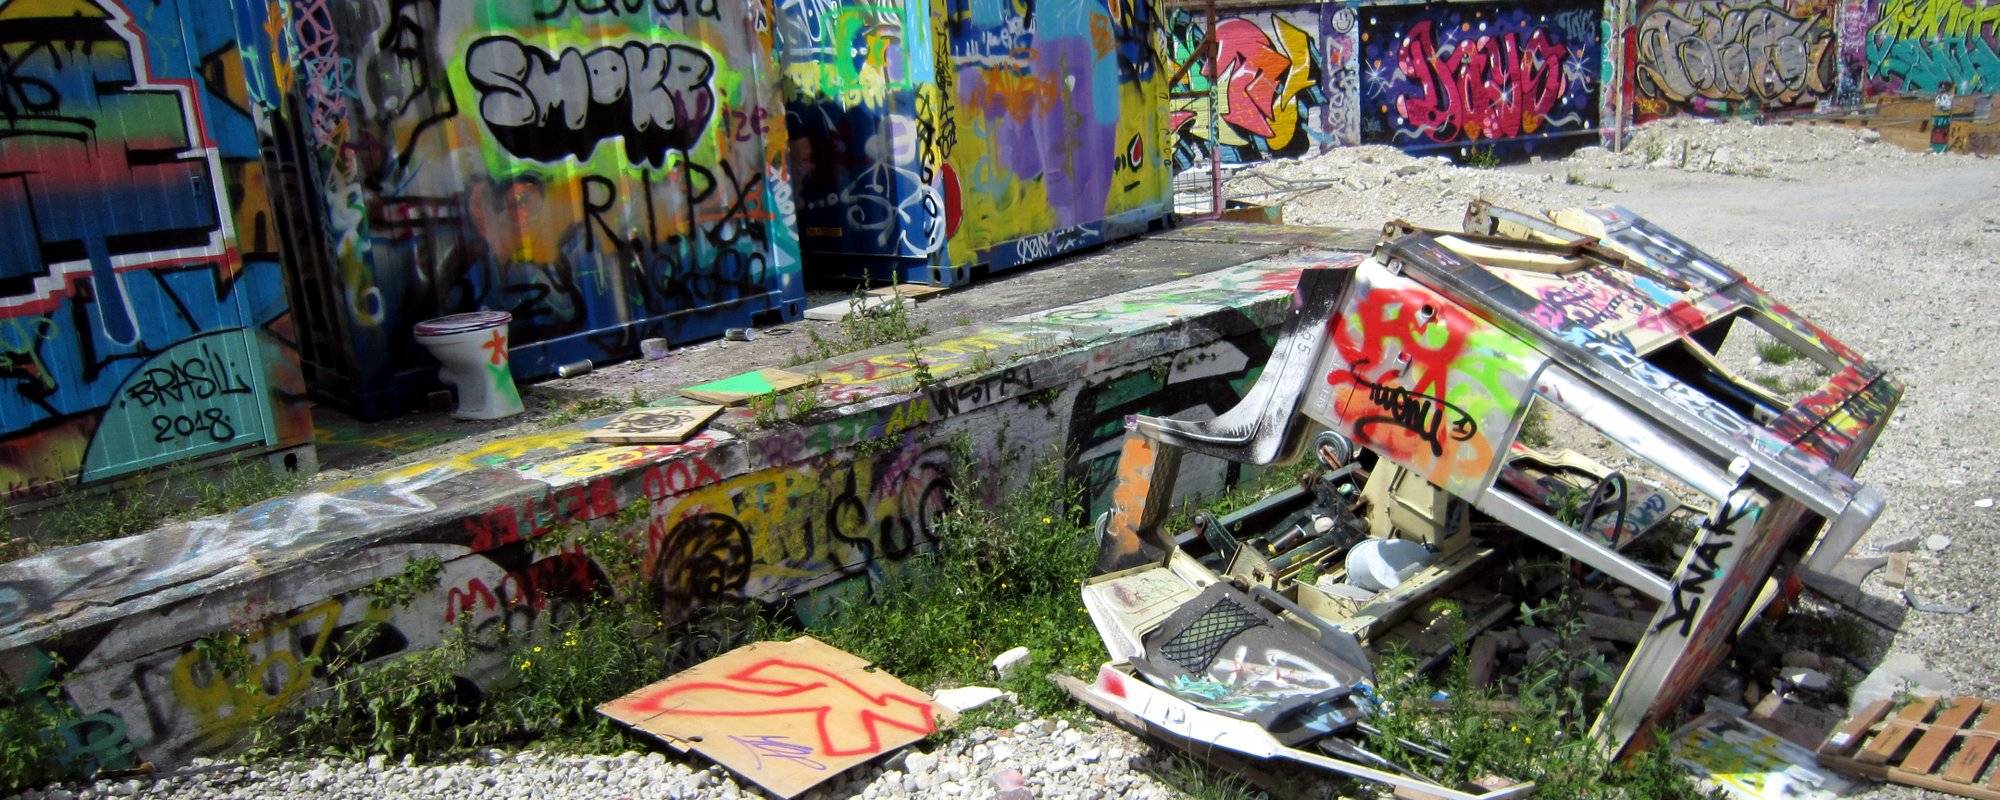 Graffiti in Munich #5 - Abandoned Construction Site - A Place With a Thousand Graffiti